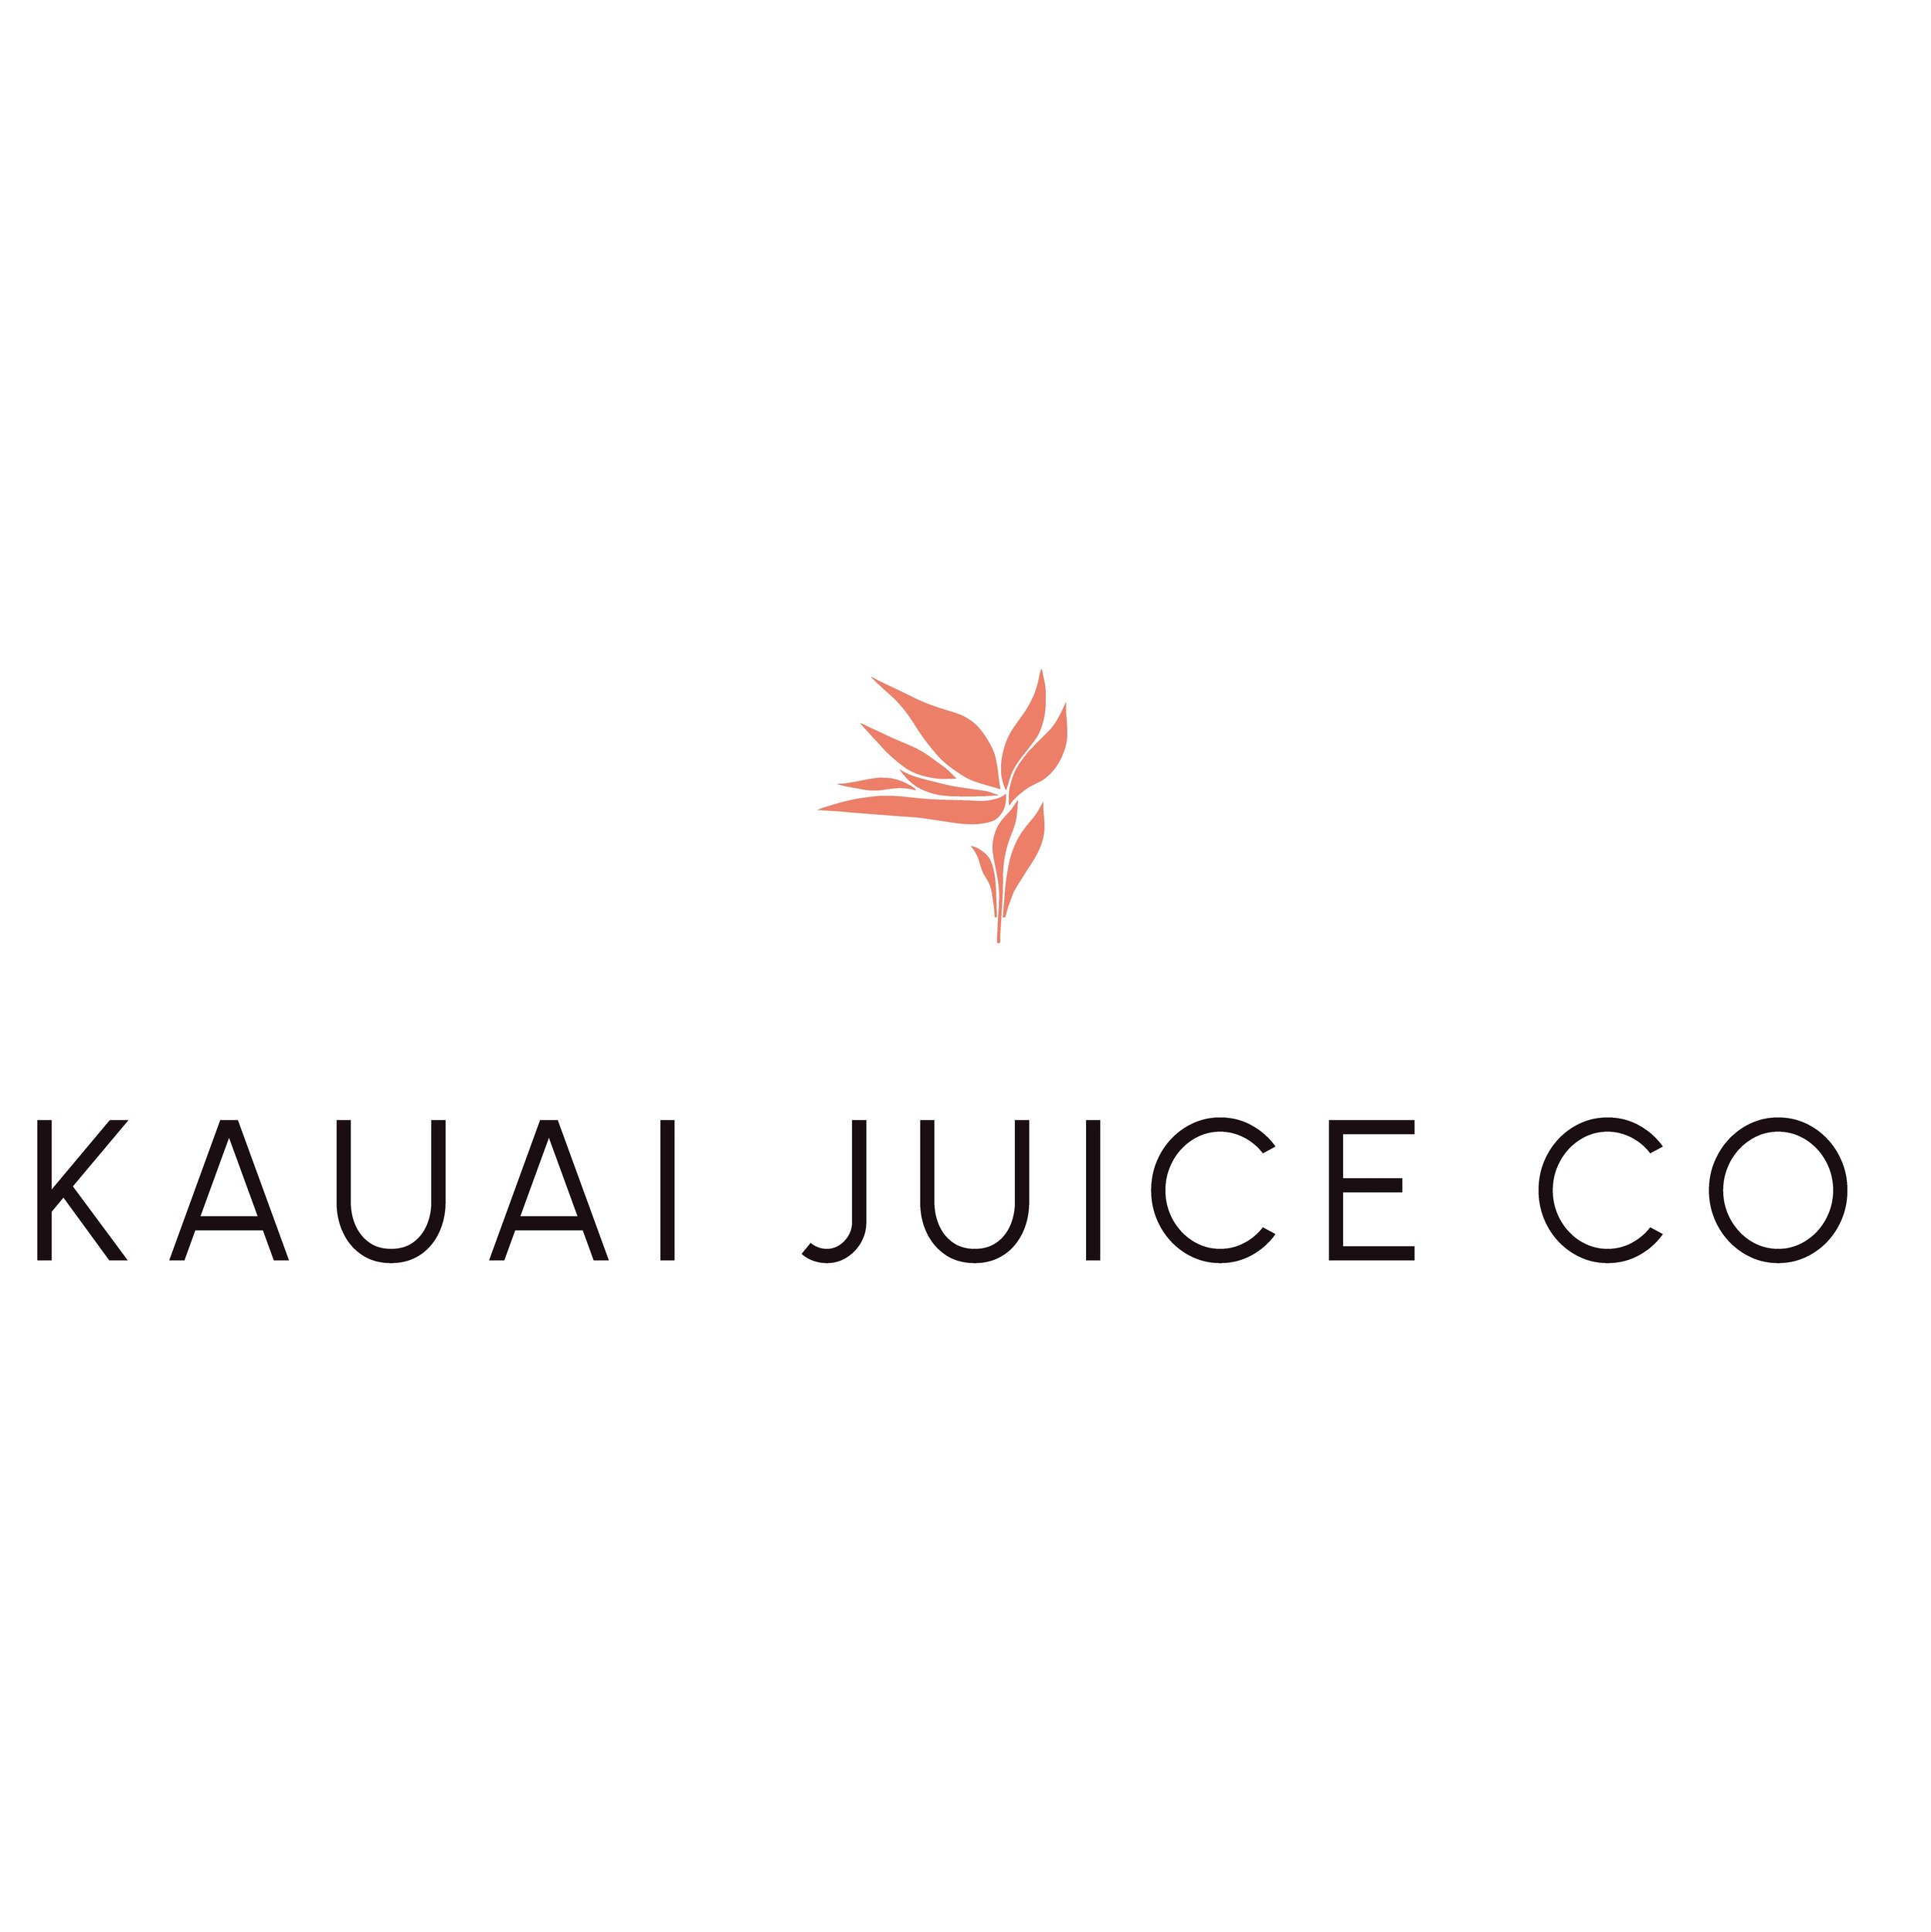 Kauai Juice Co Logo_Secondary Logo.jpg